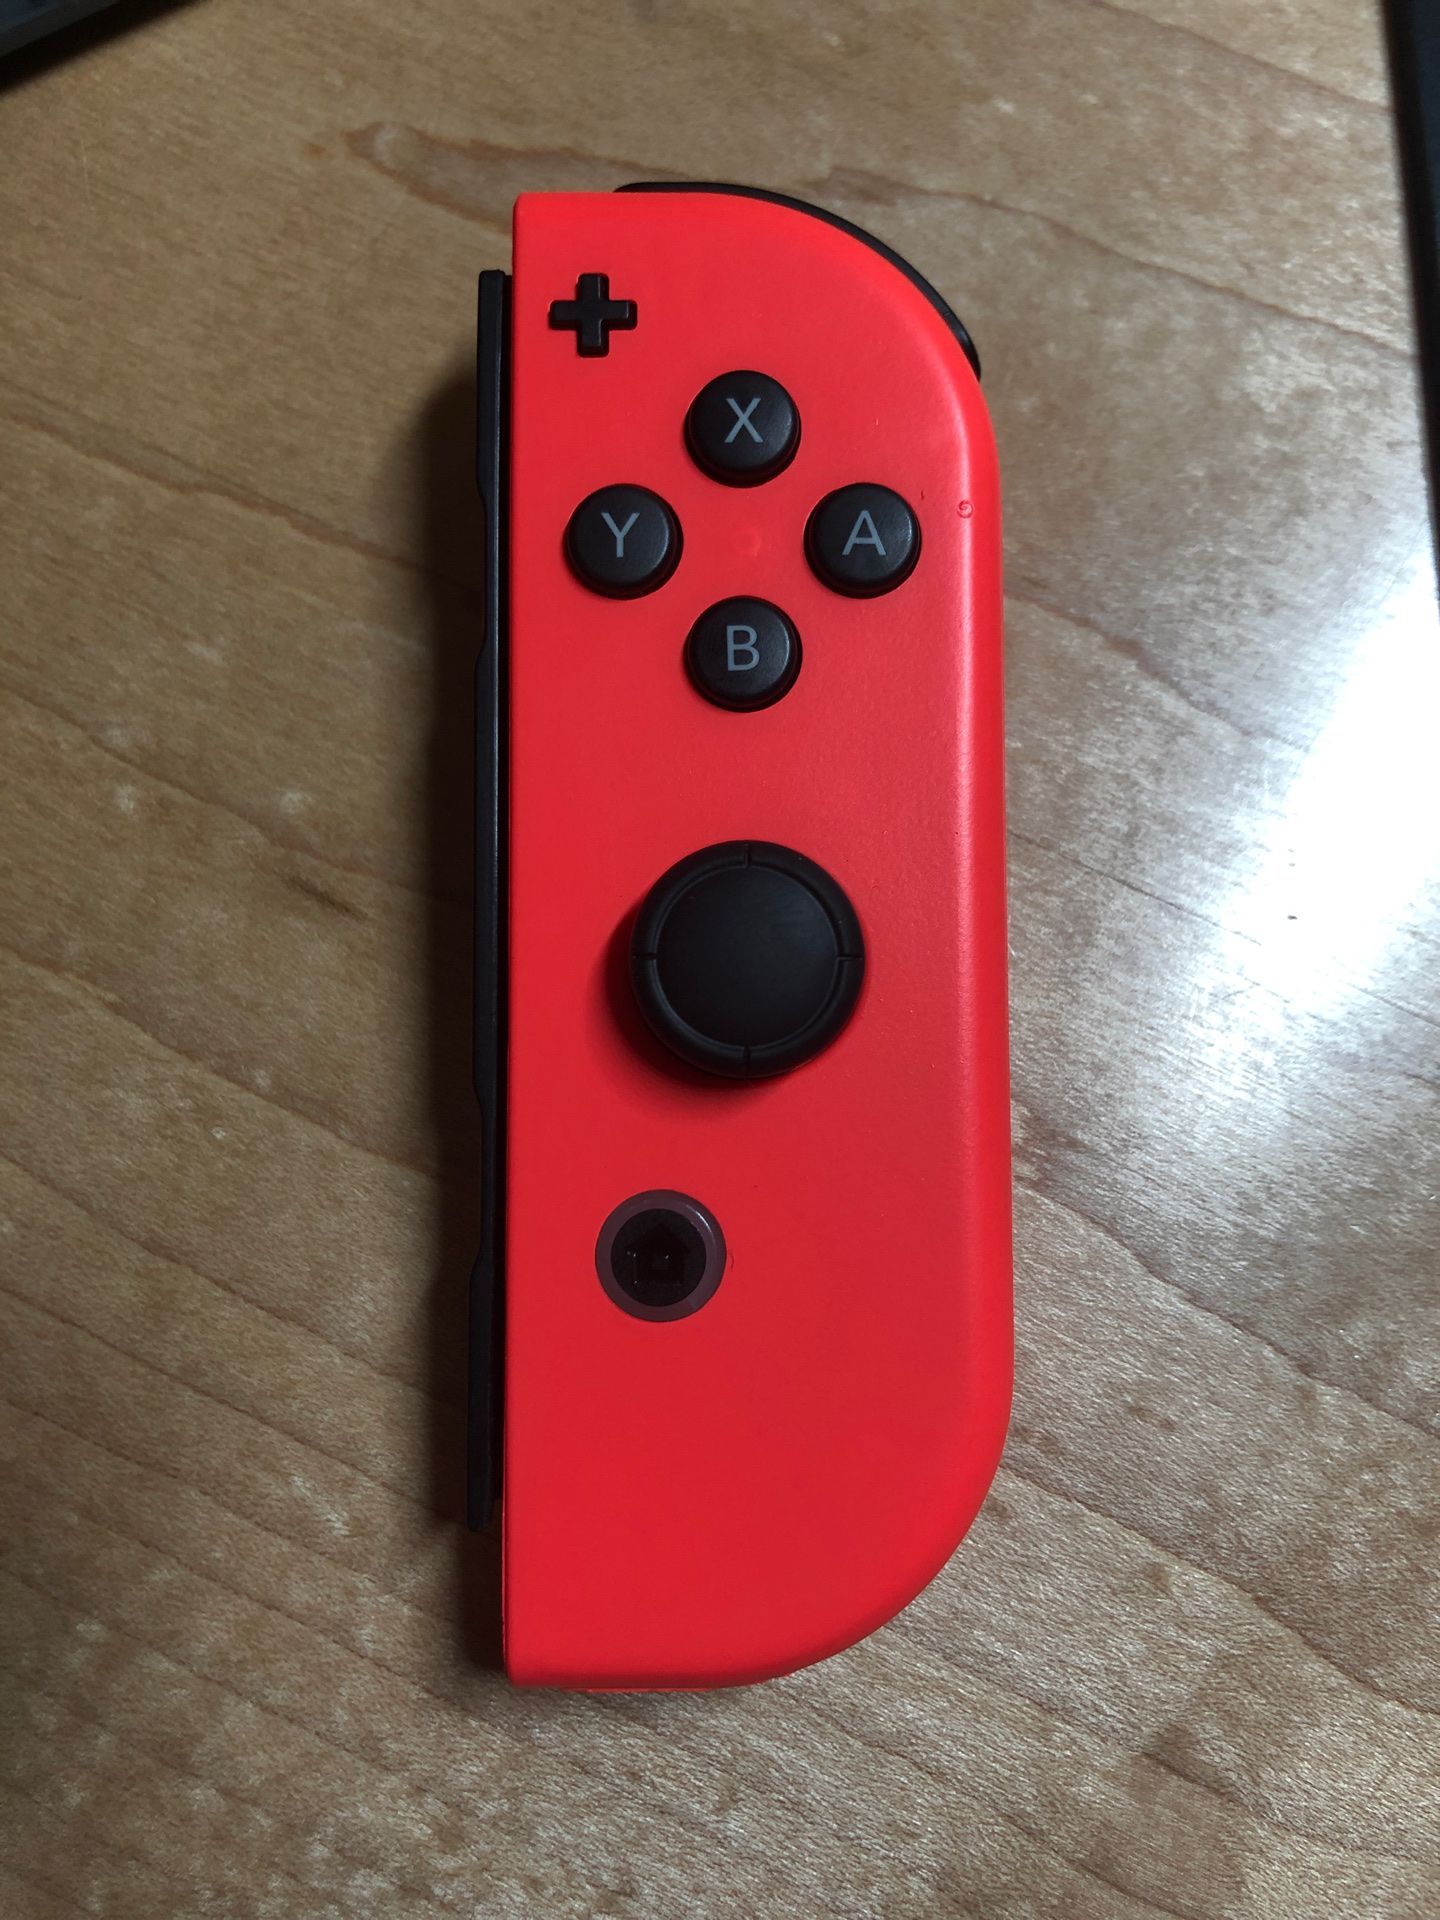 Nintendo Switch Right Joycon With Small Improvement